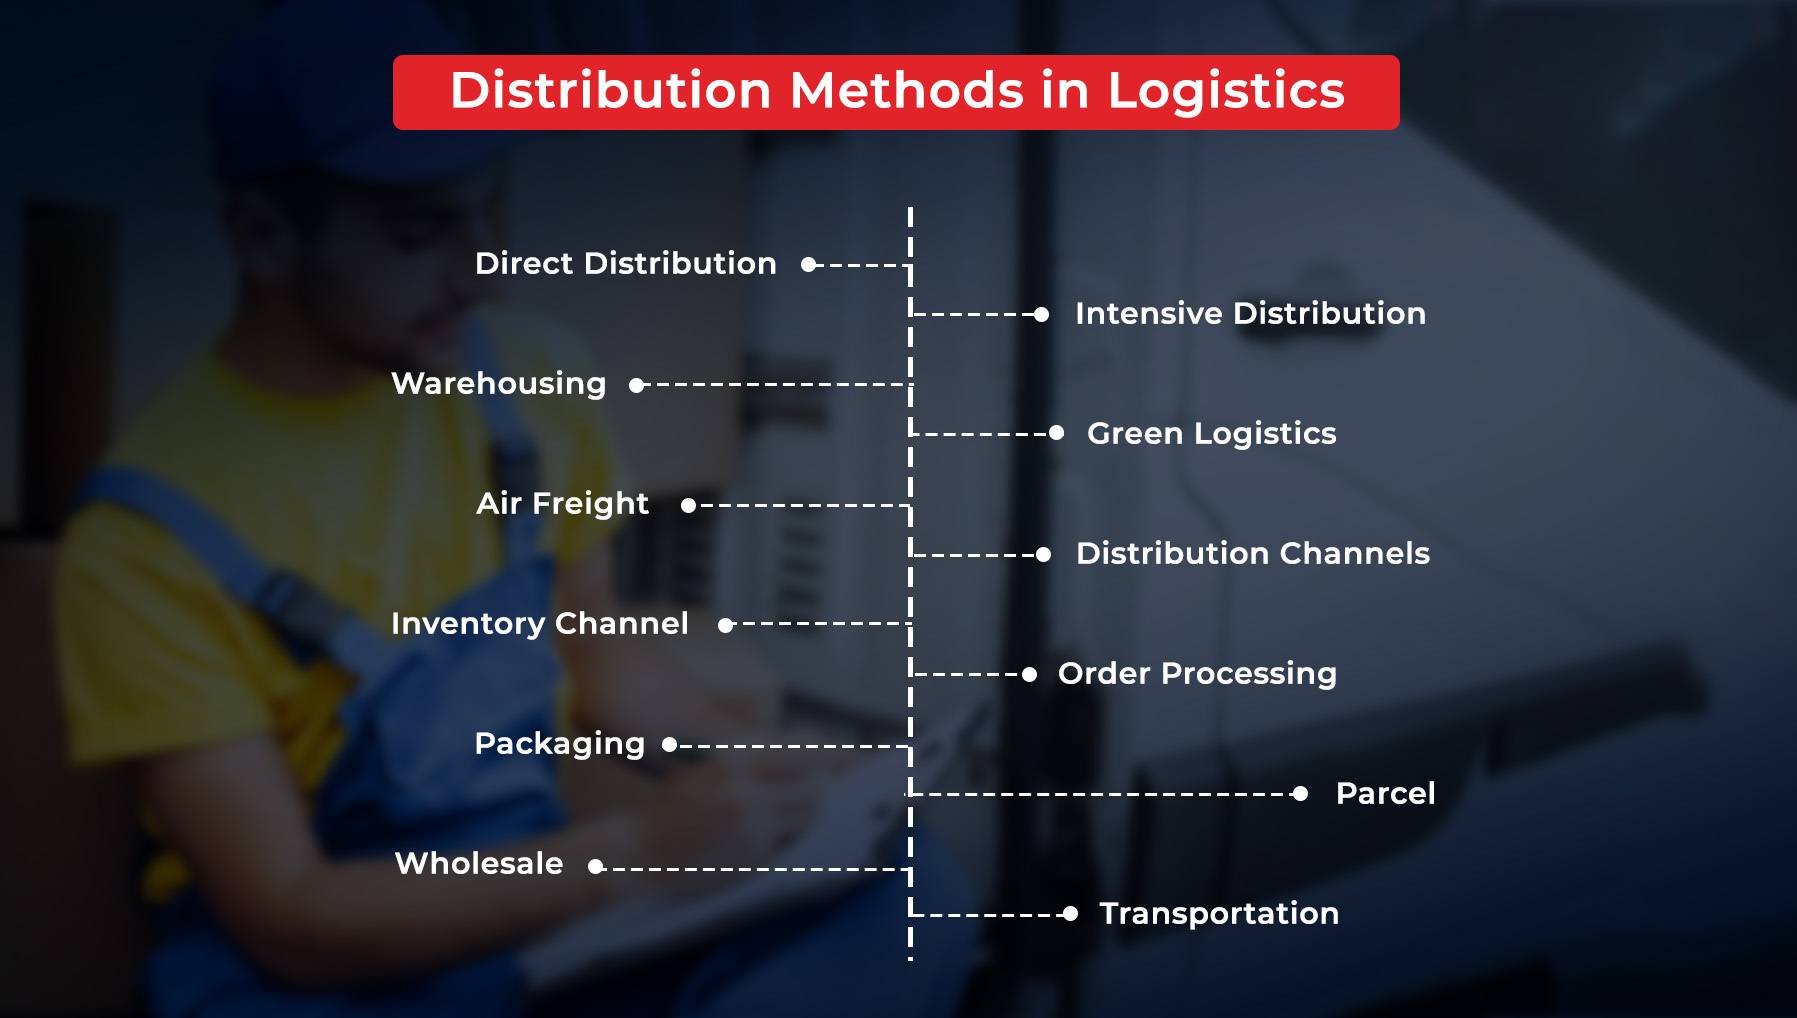 Different Distribution Methods Handled By Logistics Management Software